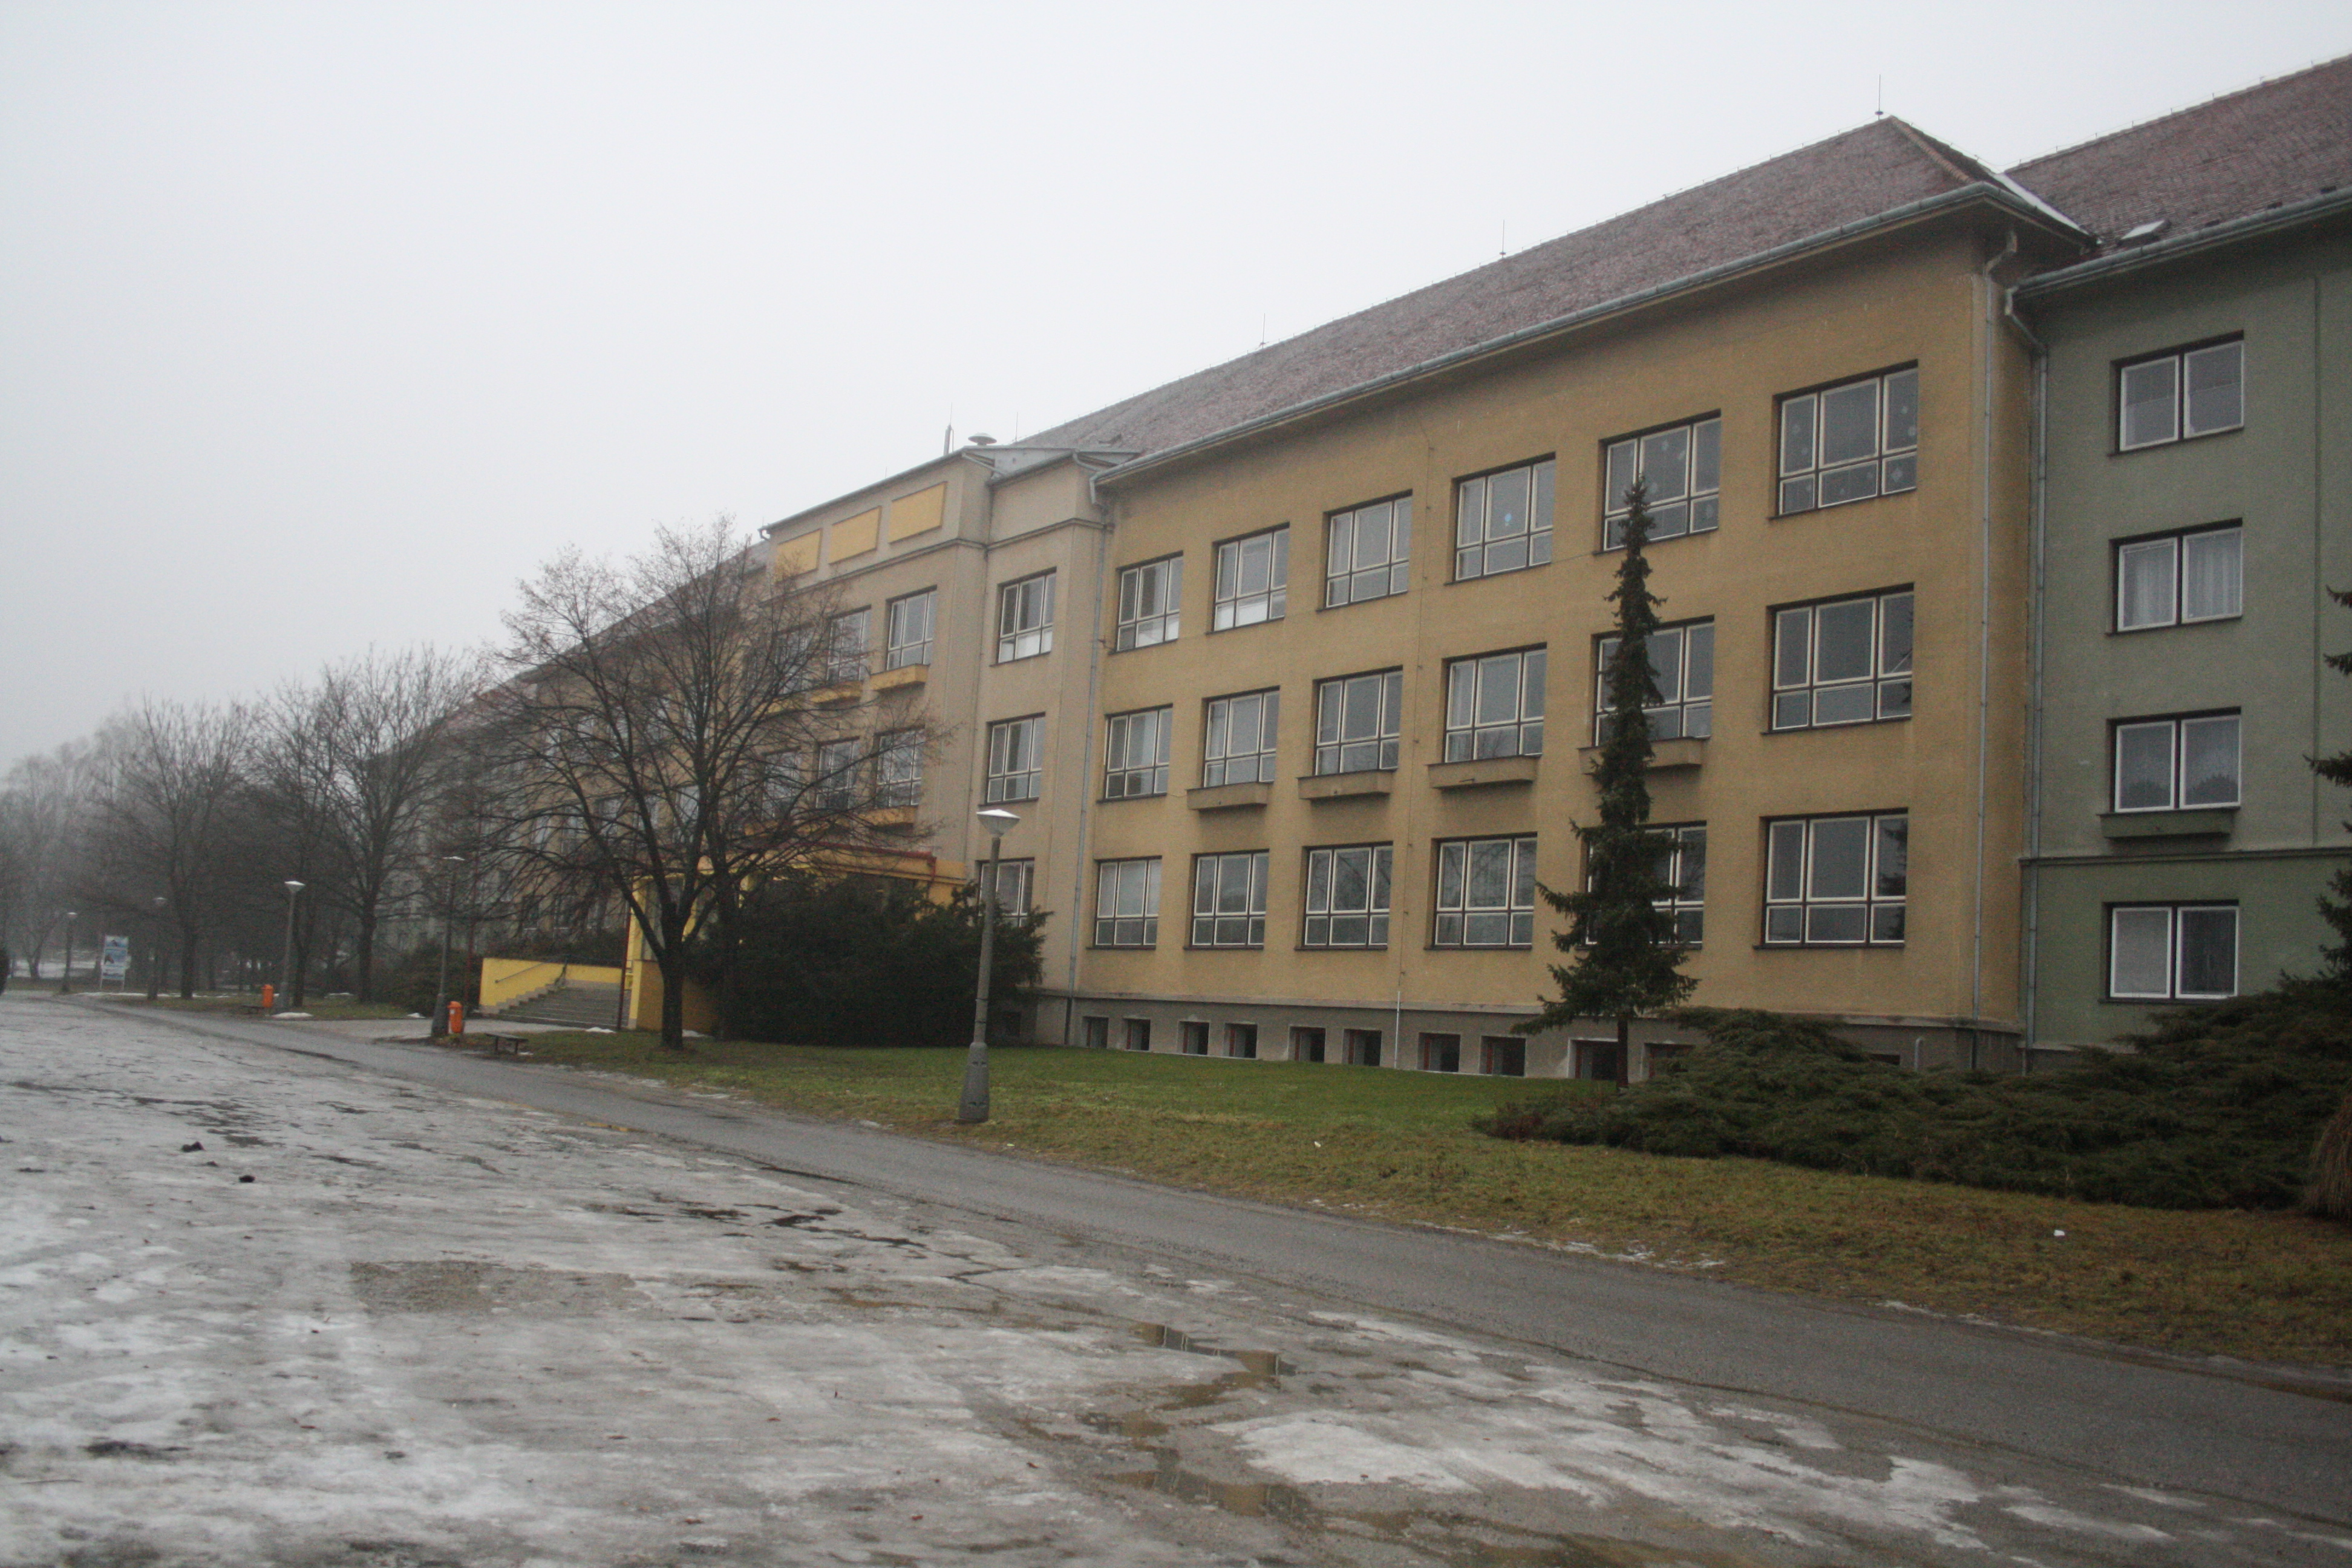 File:High school of agriculture in Třebíč, Czech Republic overview ...